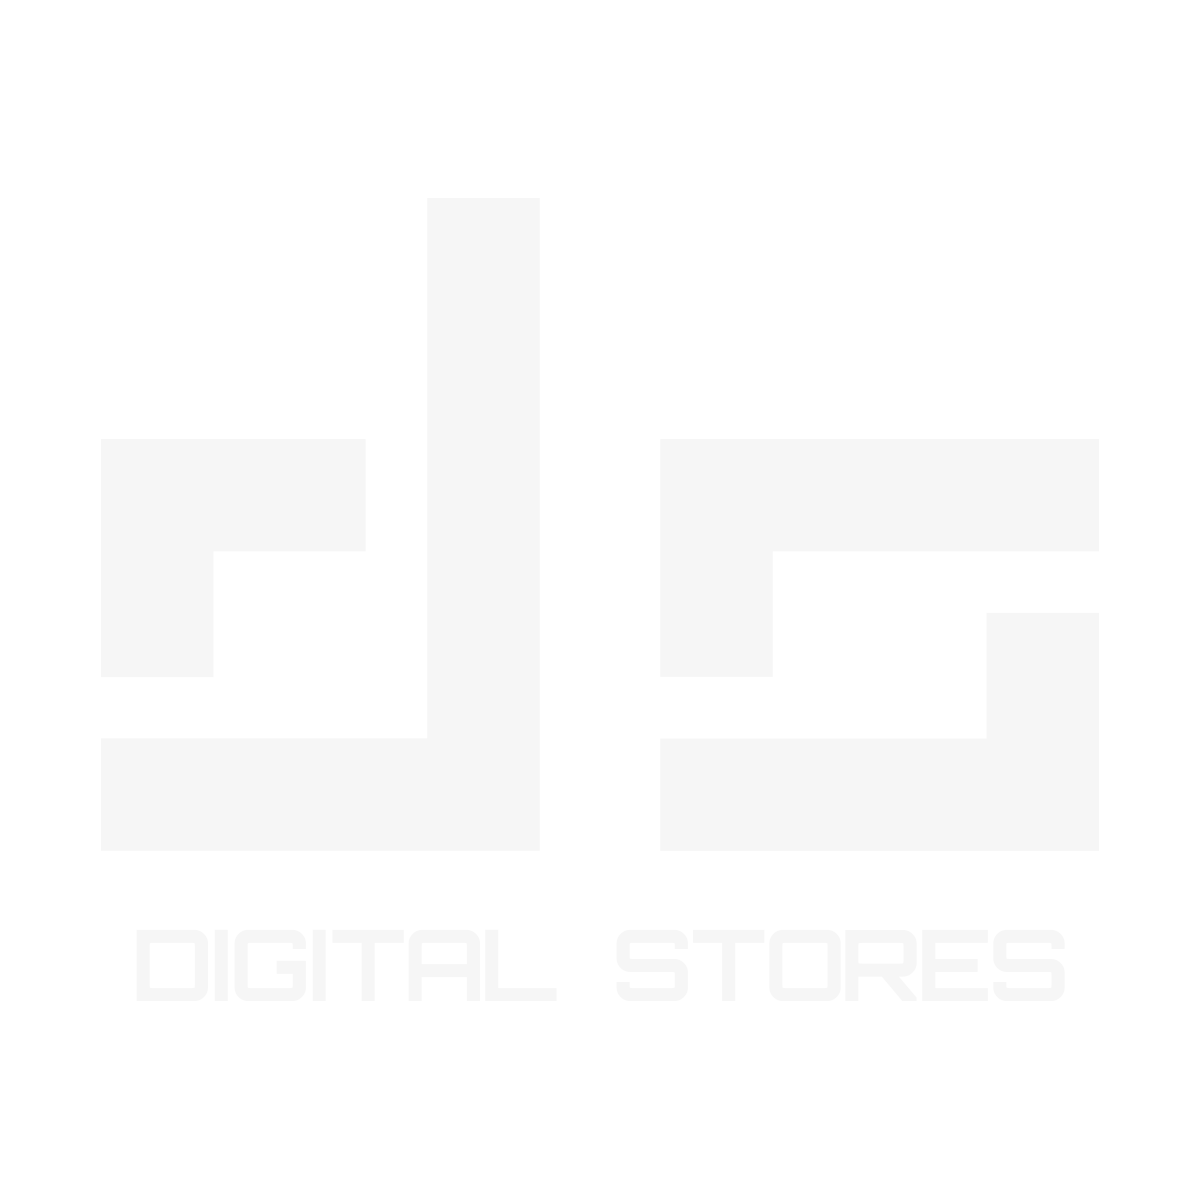 Digital stores